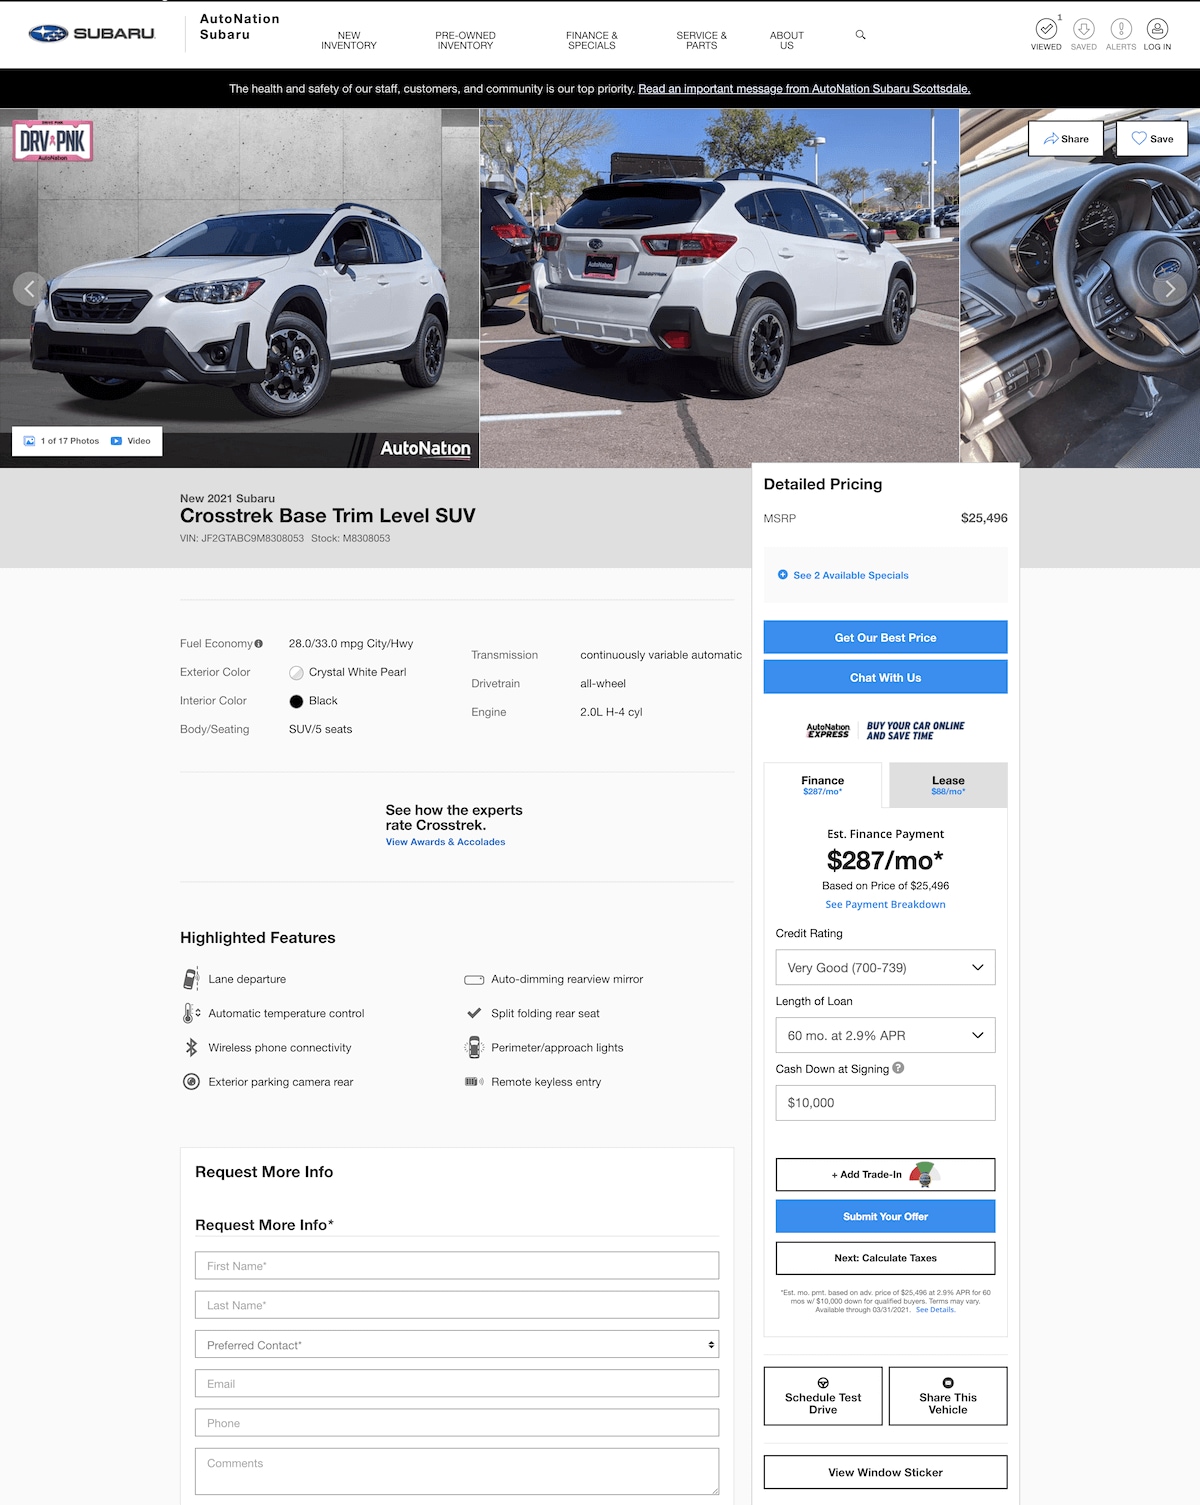 AutoNation Subaru Arapahoe vehicle details page